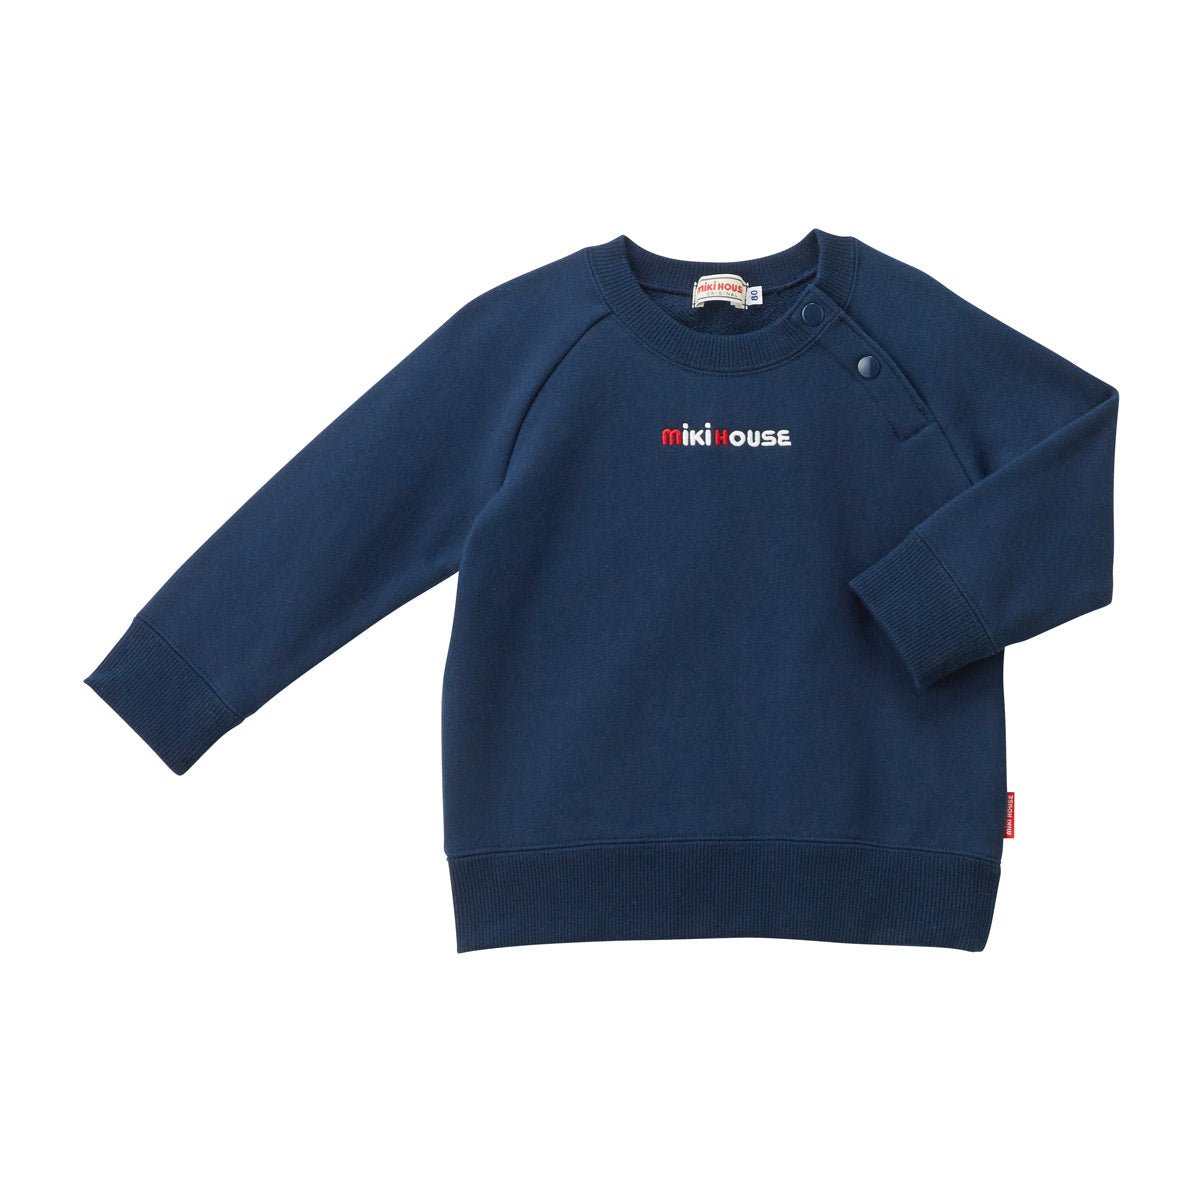 MIKI HOUSE Embroidered Logo Sweatshirt Classic - 10-5605-386-03-80